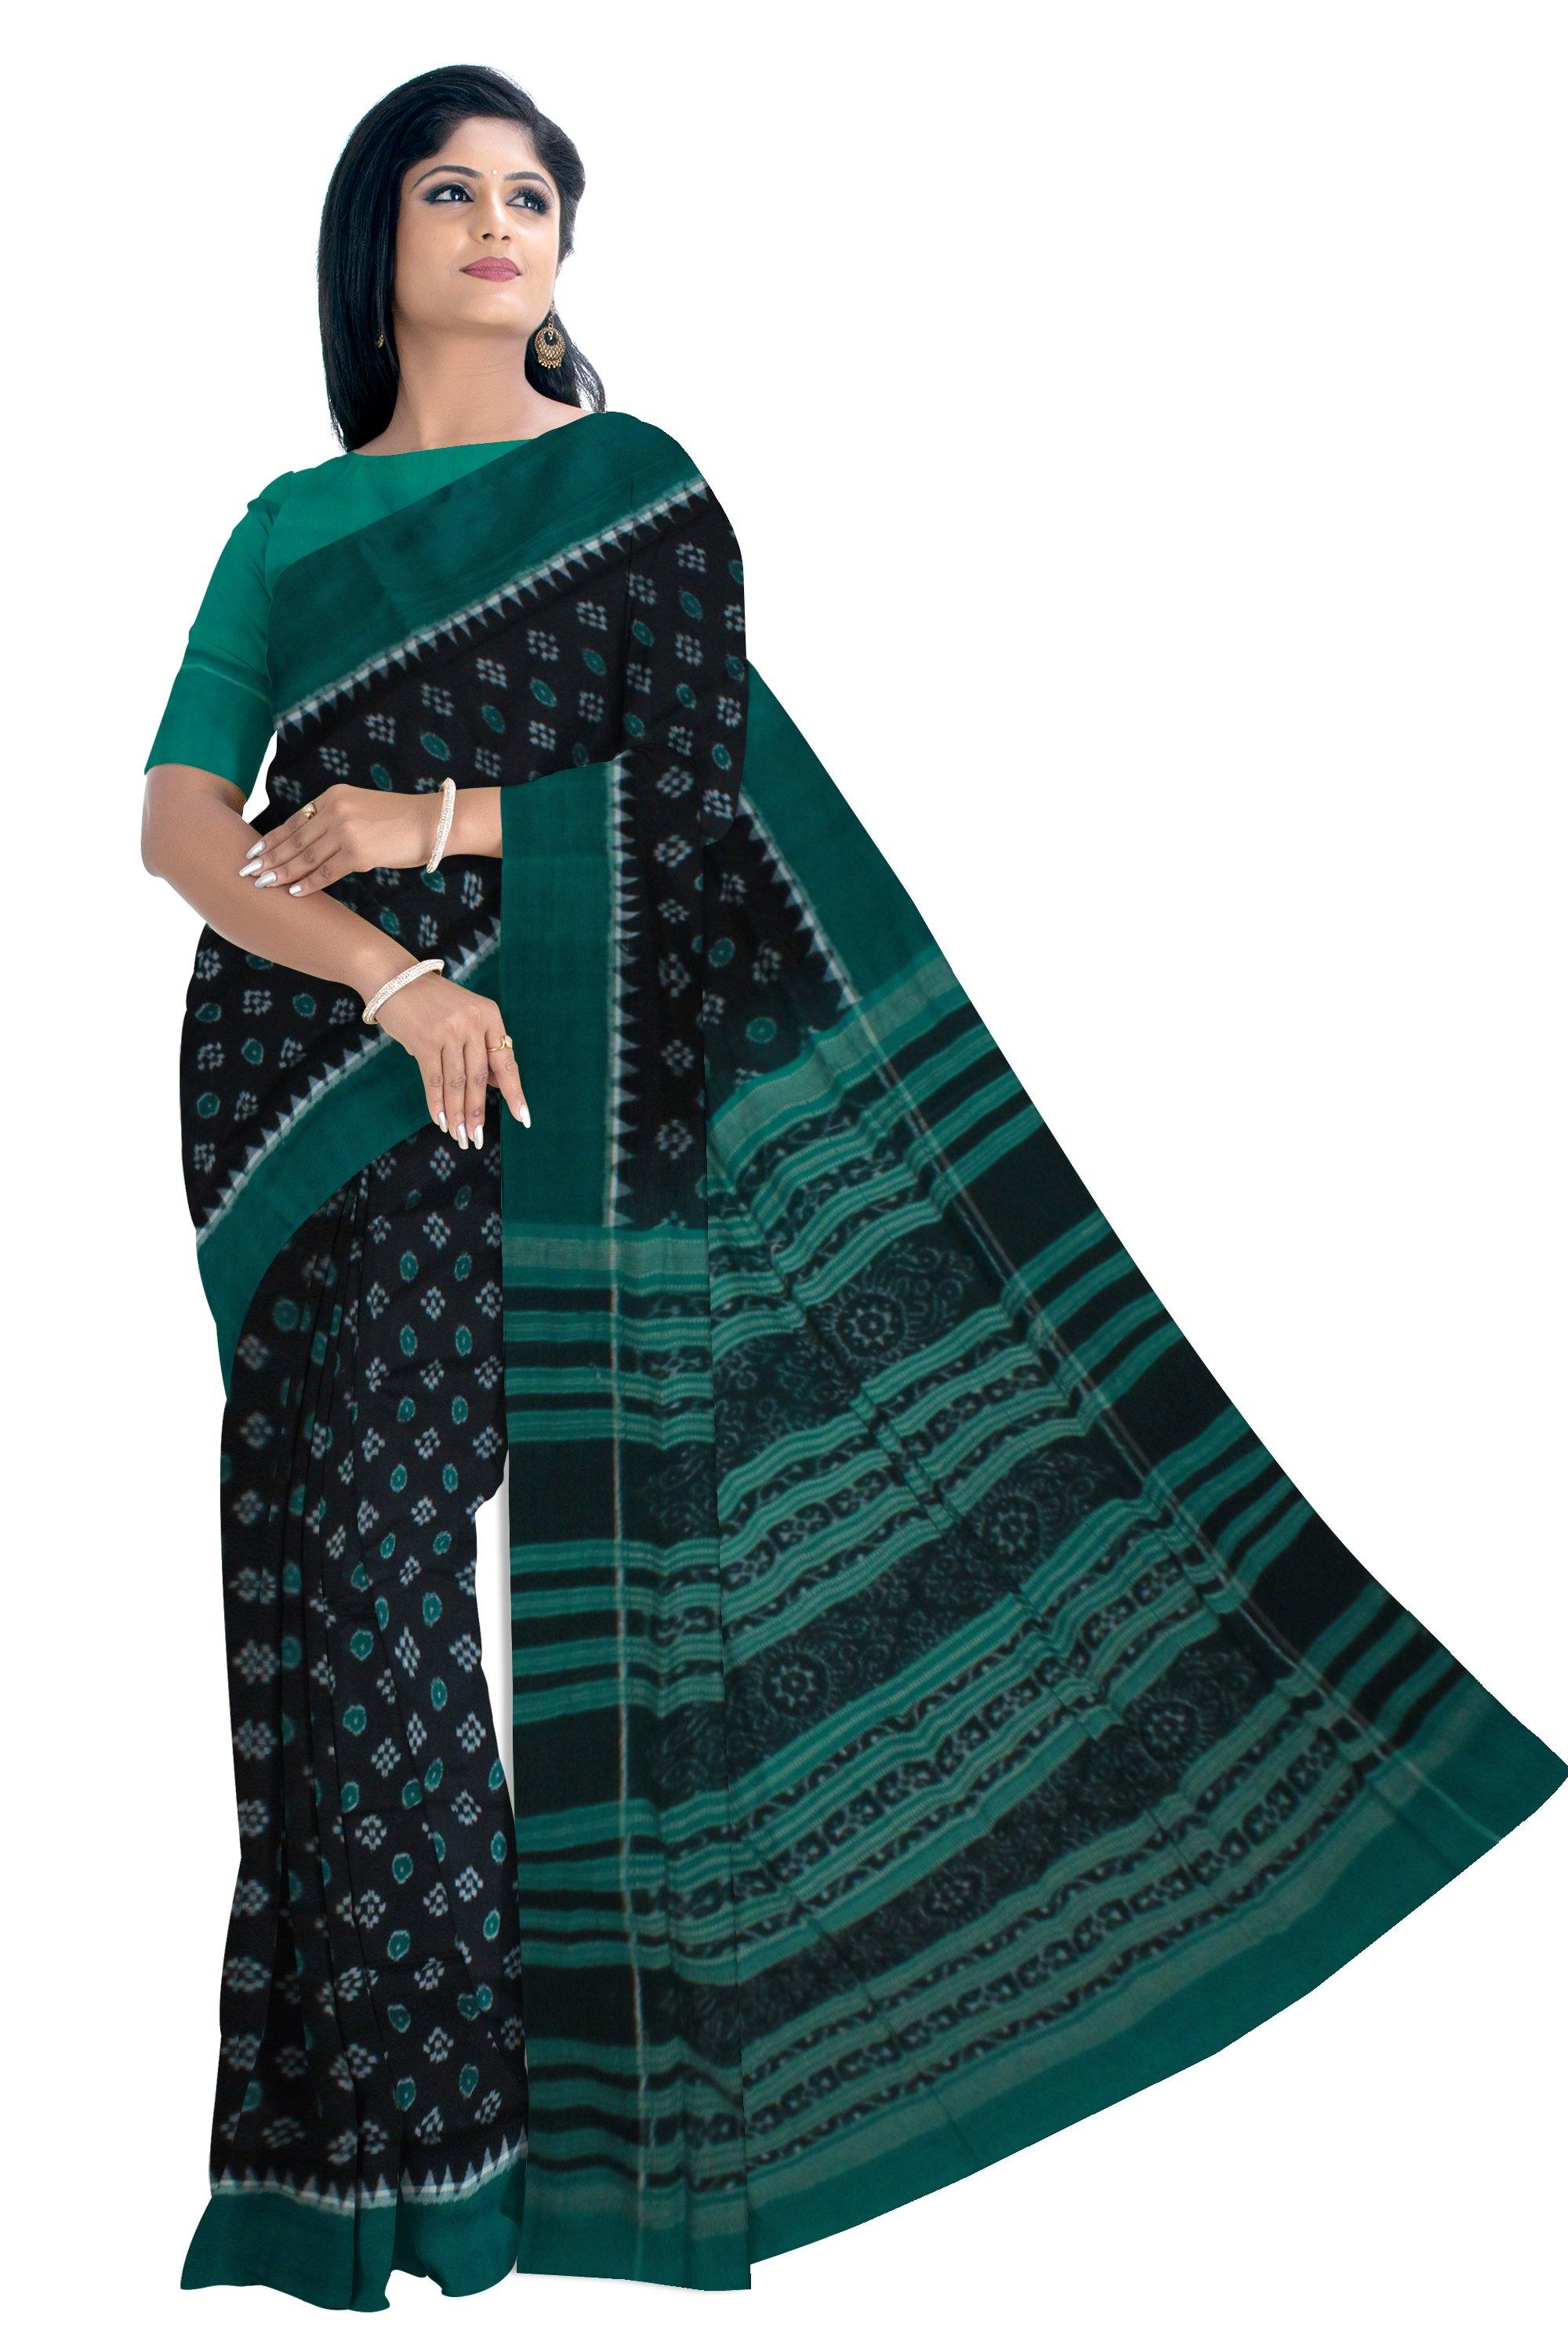 Sambalpuri Handwoven IKAT cotton Saree With plane border in Black and Green Color with Blouse Piece - Koshali Arts & Crafts Enterprise